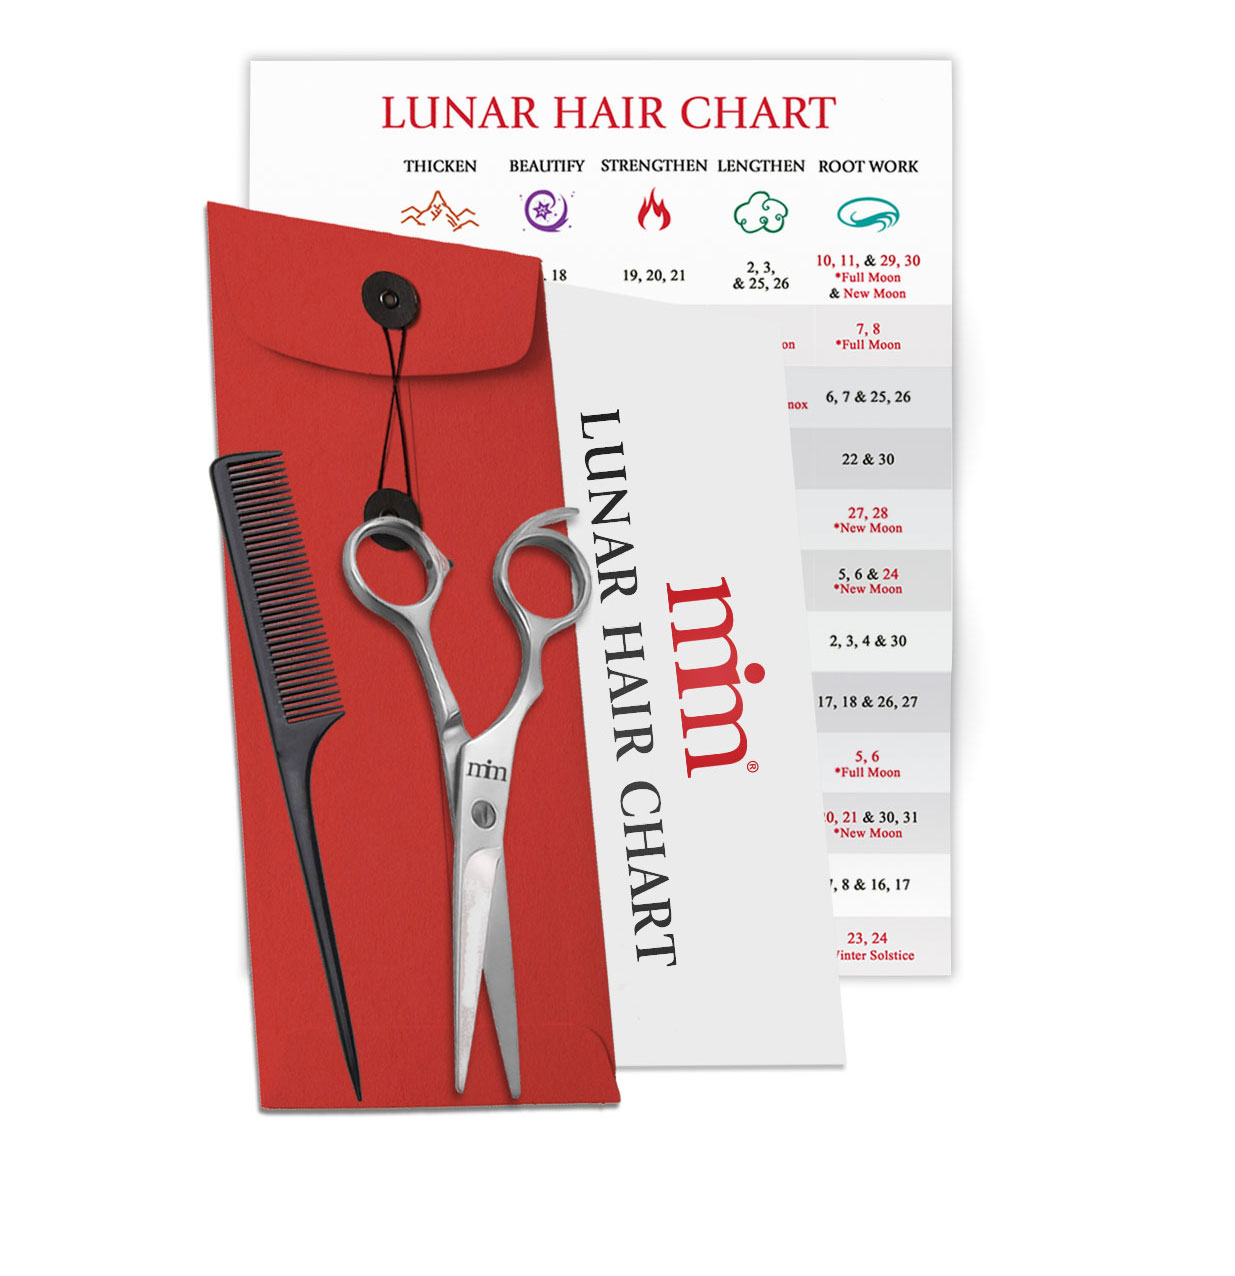 Lunar Hair : Blunt Snip Haircutting Kit throughout Anthony Morrocco Lunar Hair Cutting Chart 2020